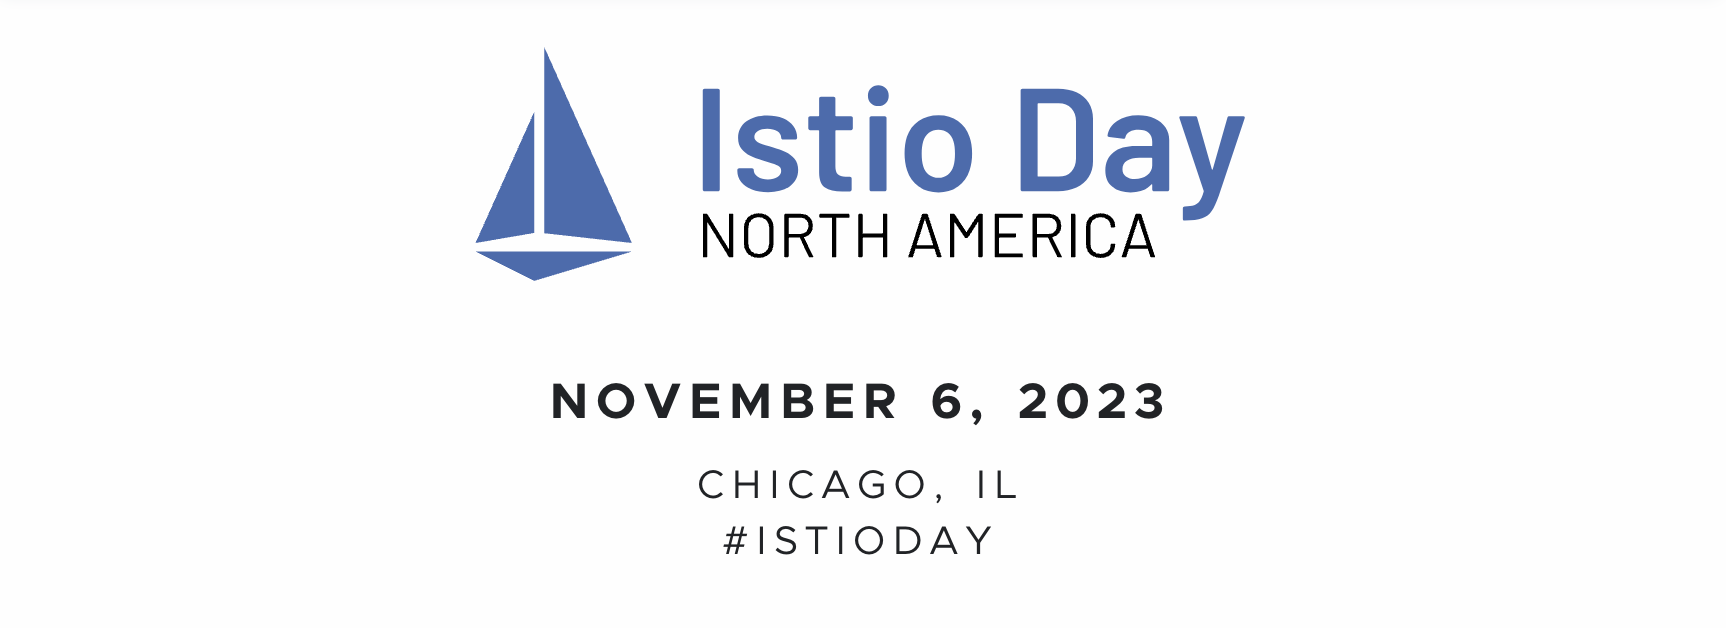 Istio Day North America, 6 November 2023, Chicago. #istioday